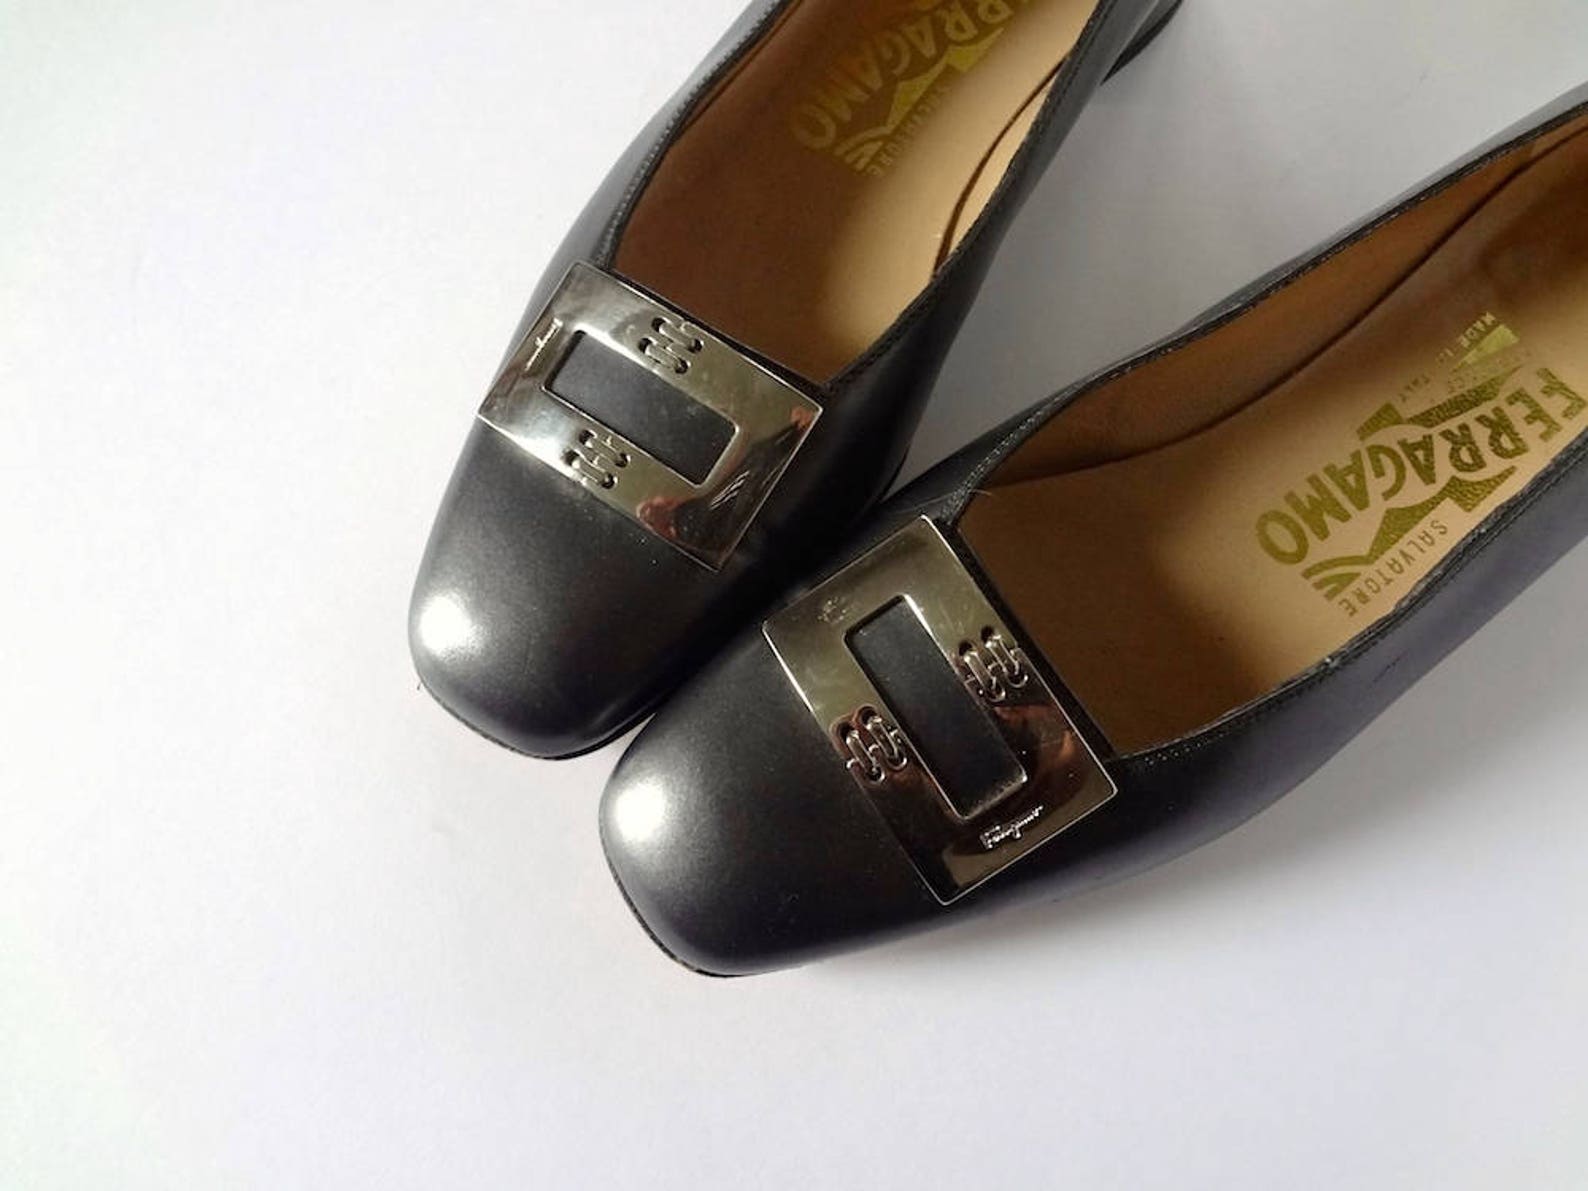 vintage ferragamo ballet flats leather low heel shoes with metal buckle - size 36b